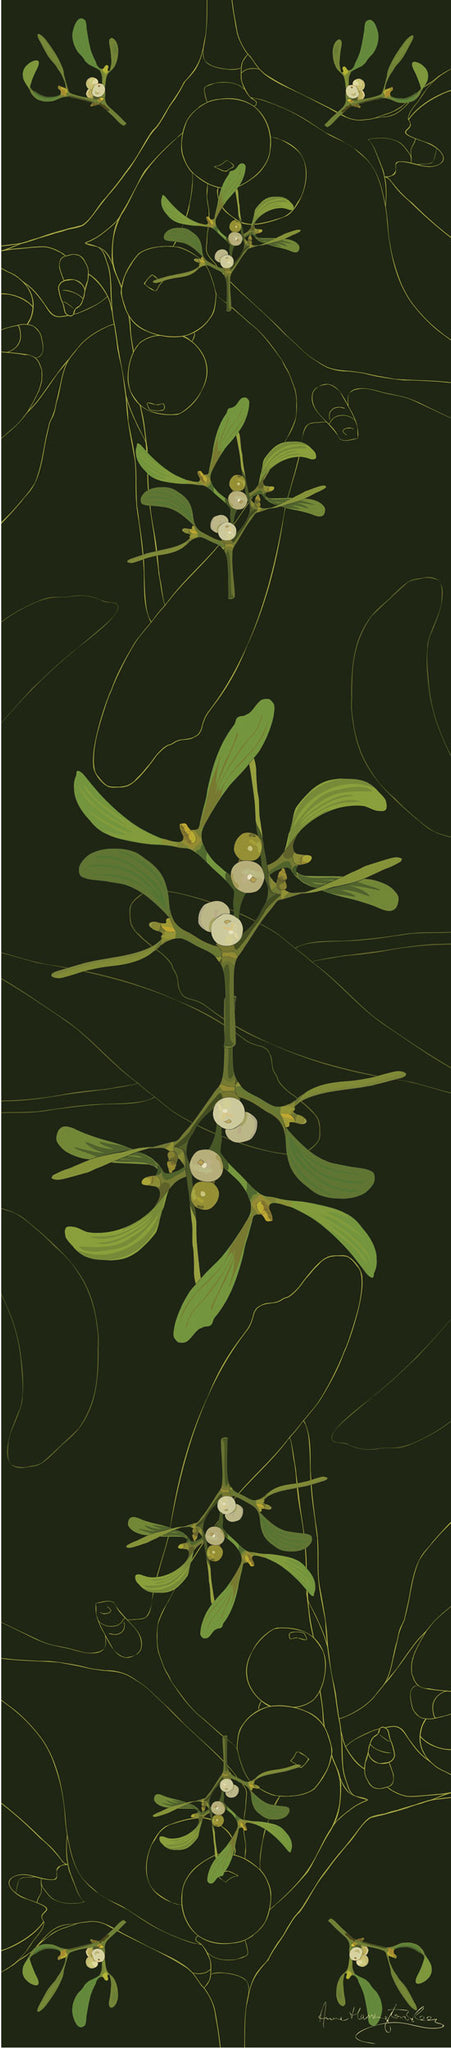 Mistletoe table runner designed by Anne Harrington Rees.  Symmetrical design of leaves and berries on a dark green background.